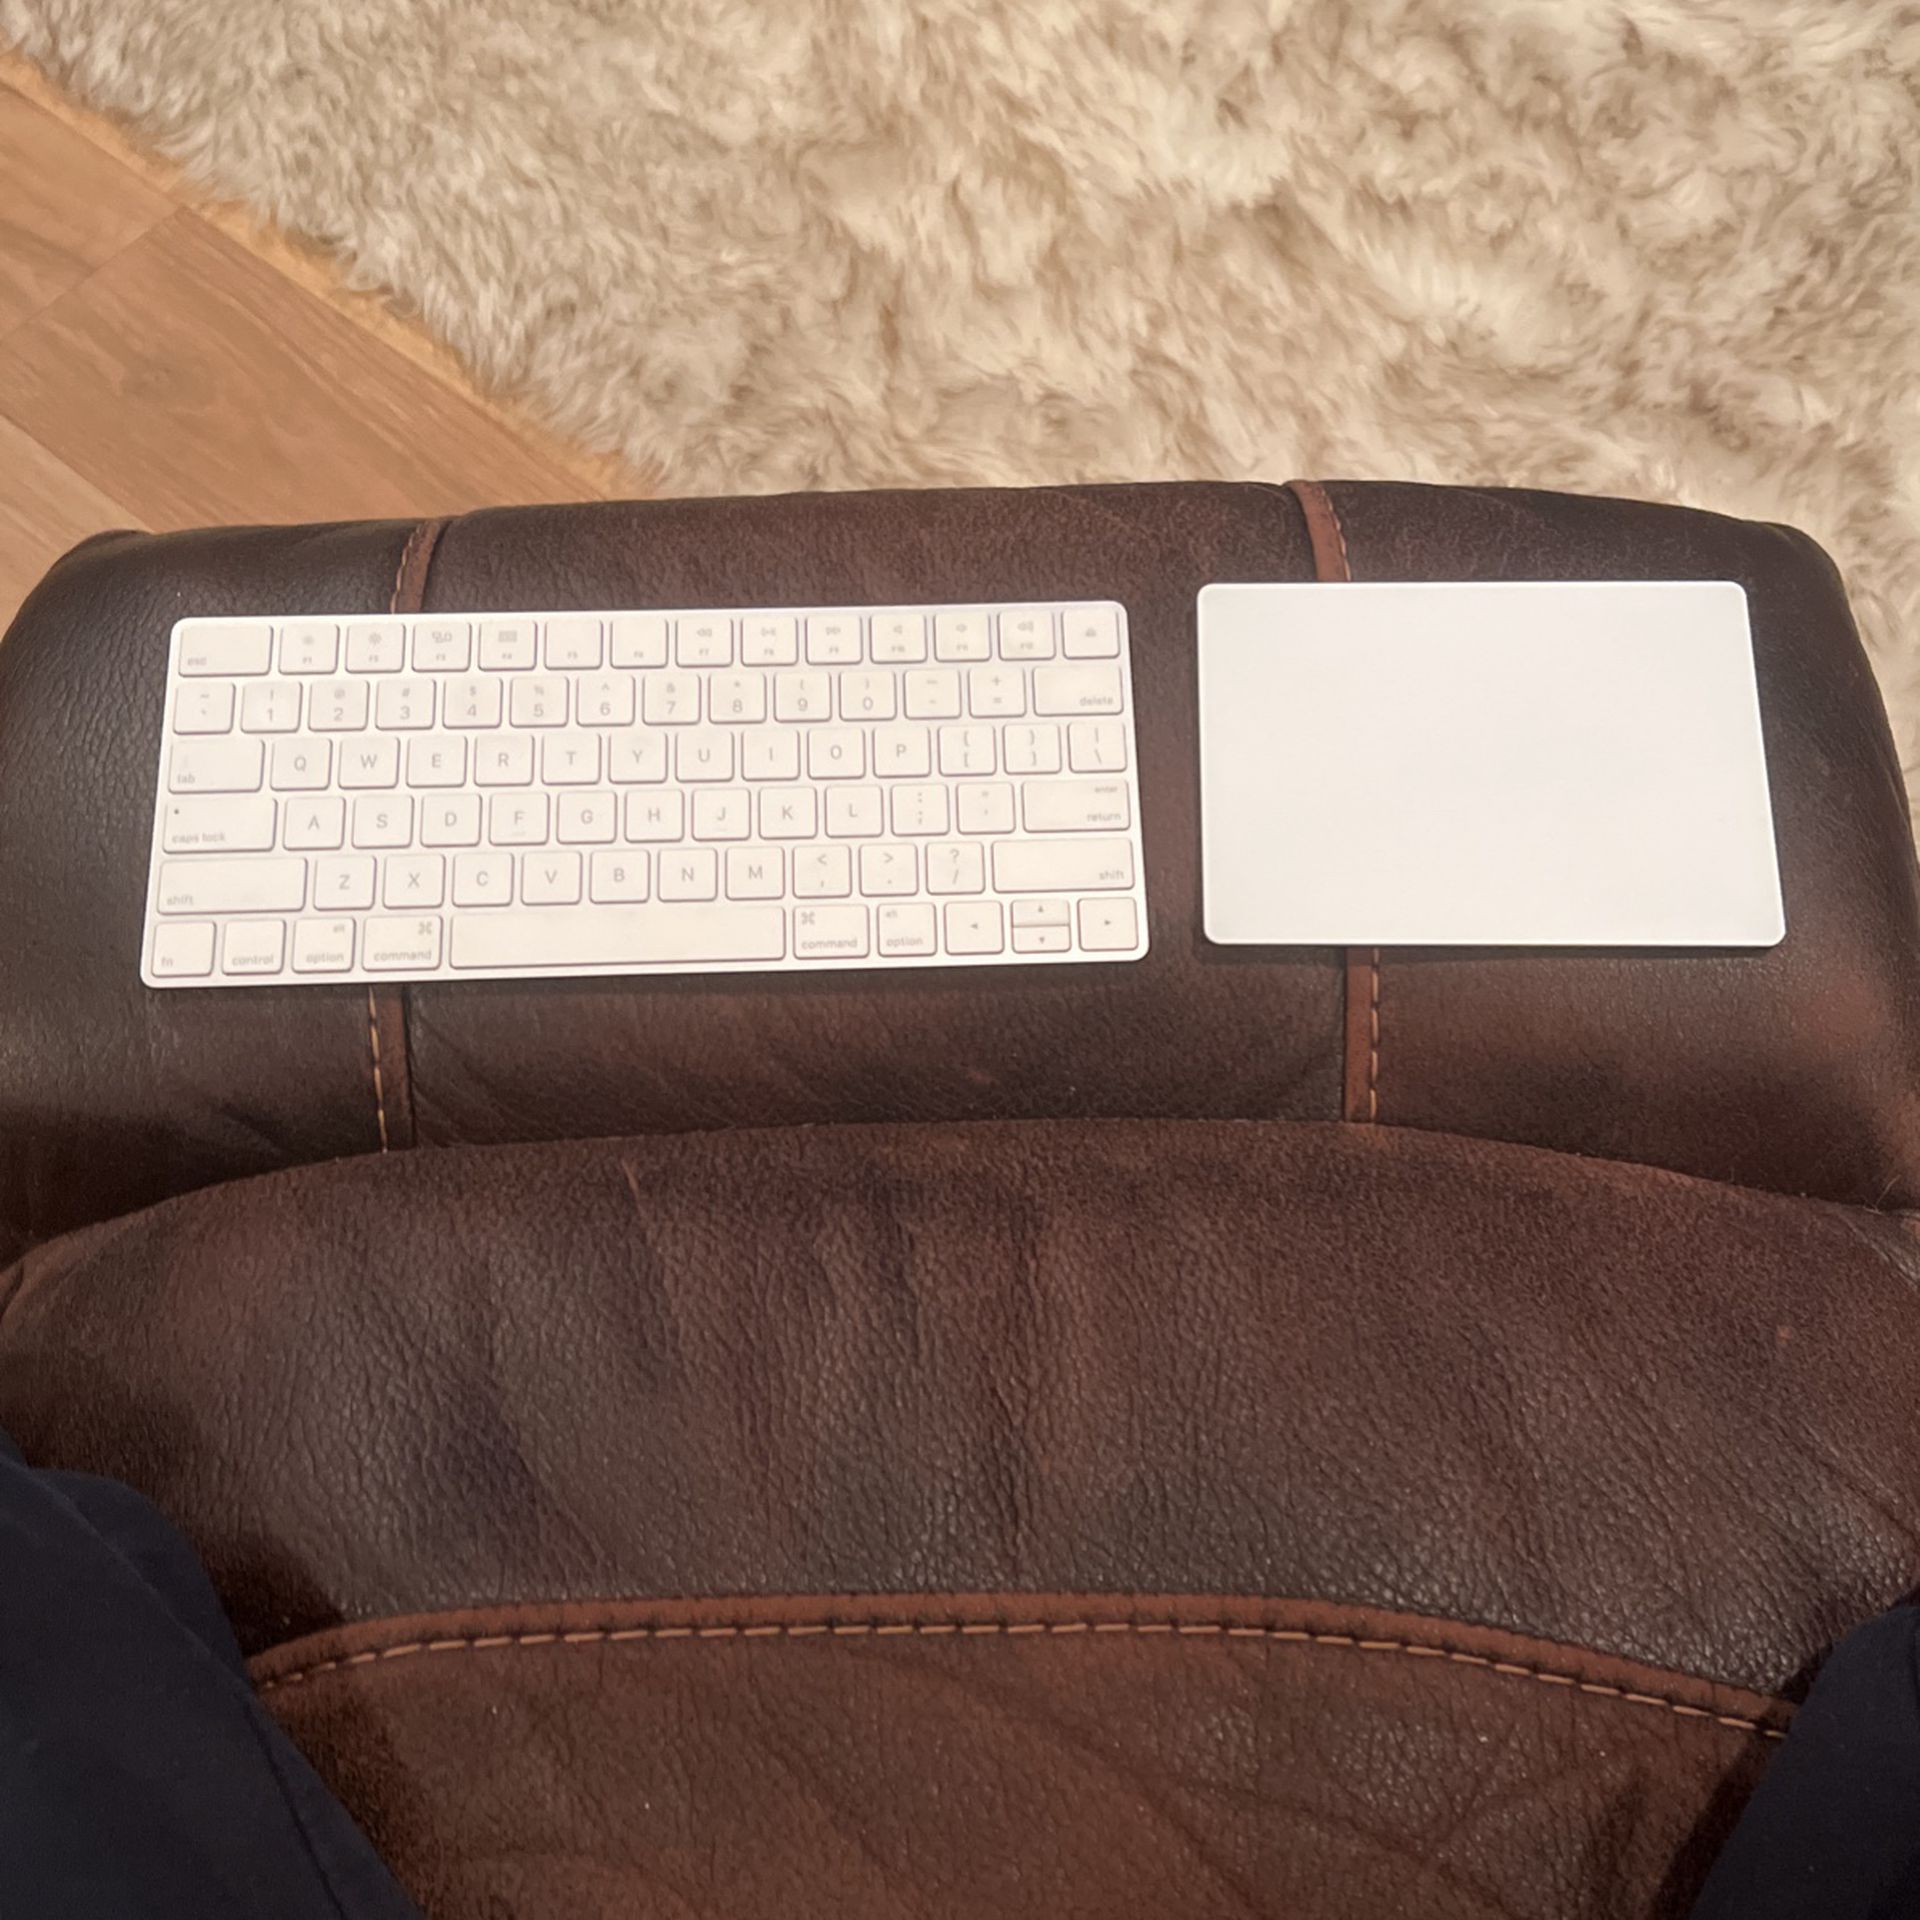 Apple Keyboard 2 and Trackpad